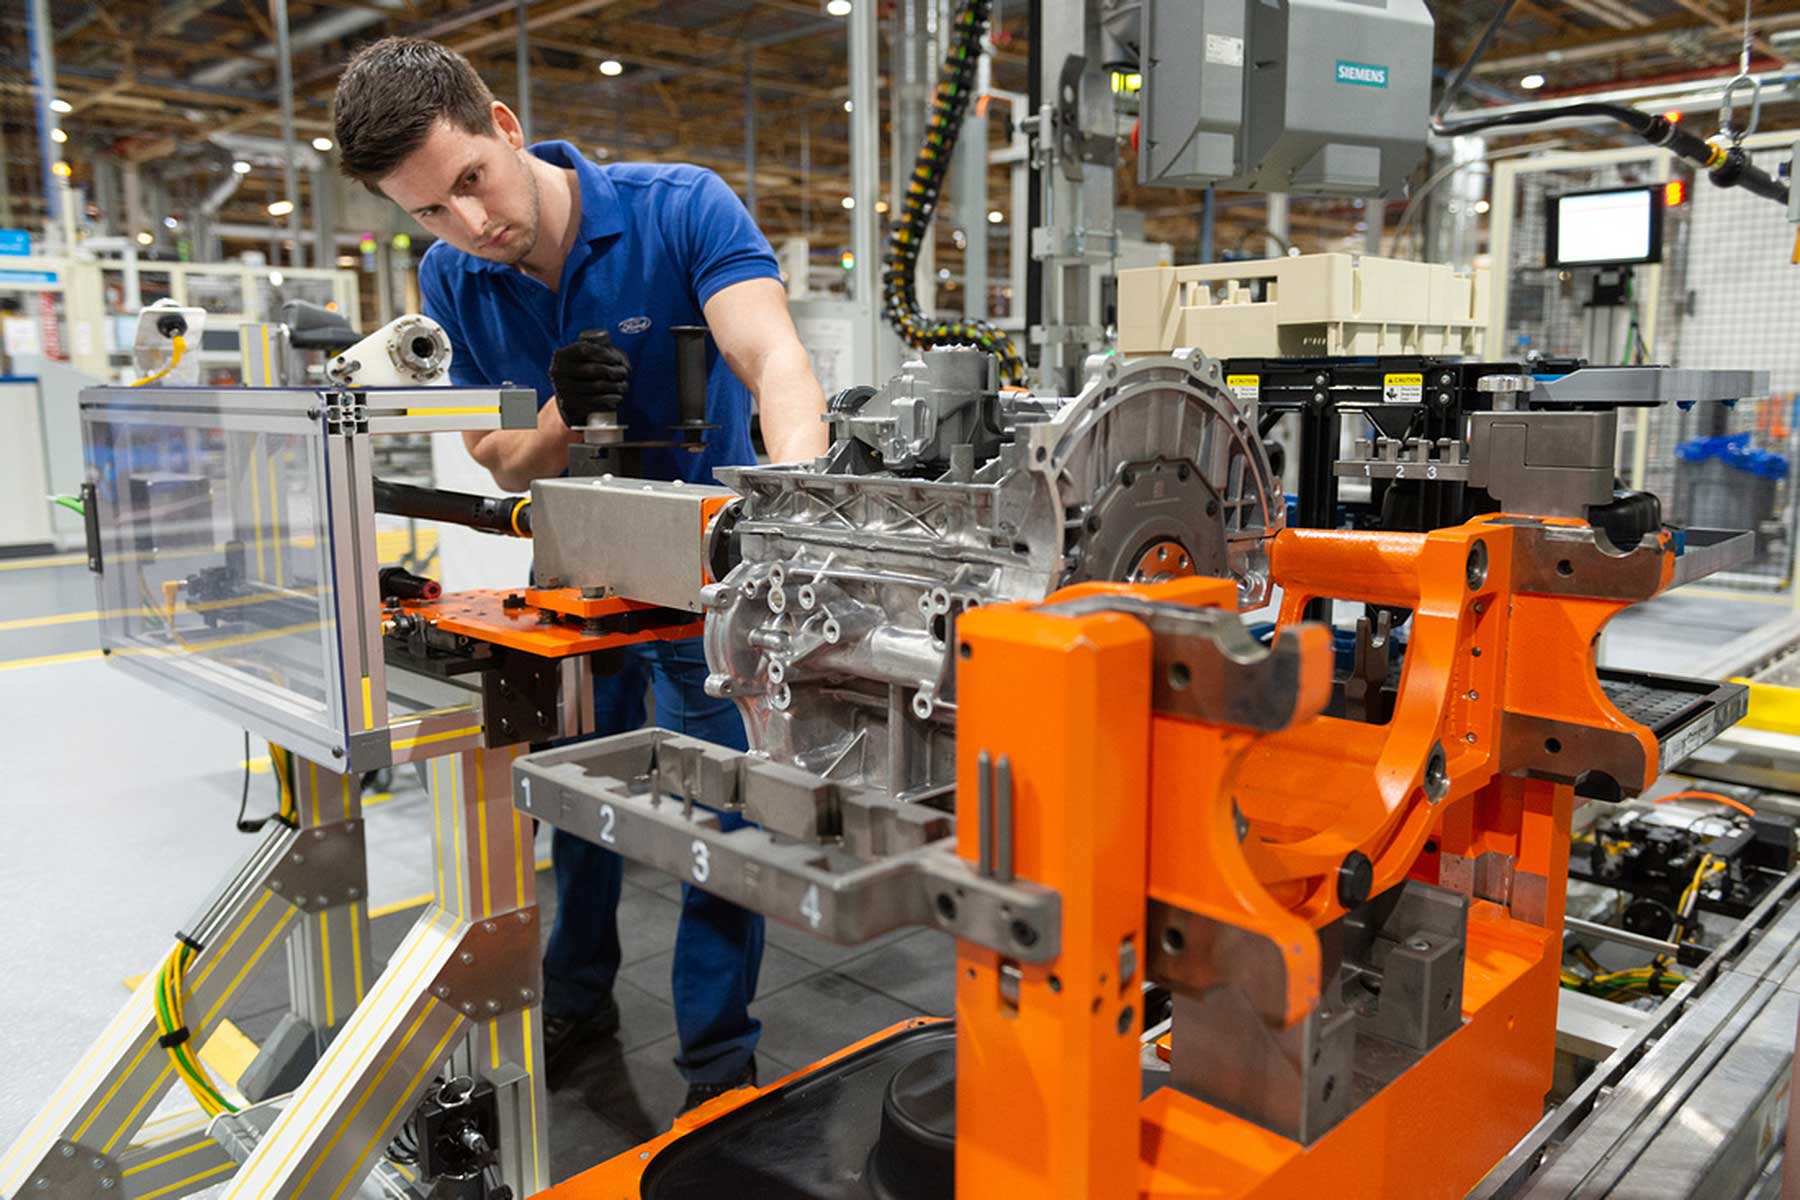 Ford Bridgend begins building the new Dragon engine